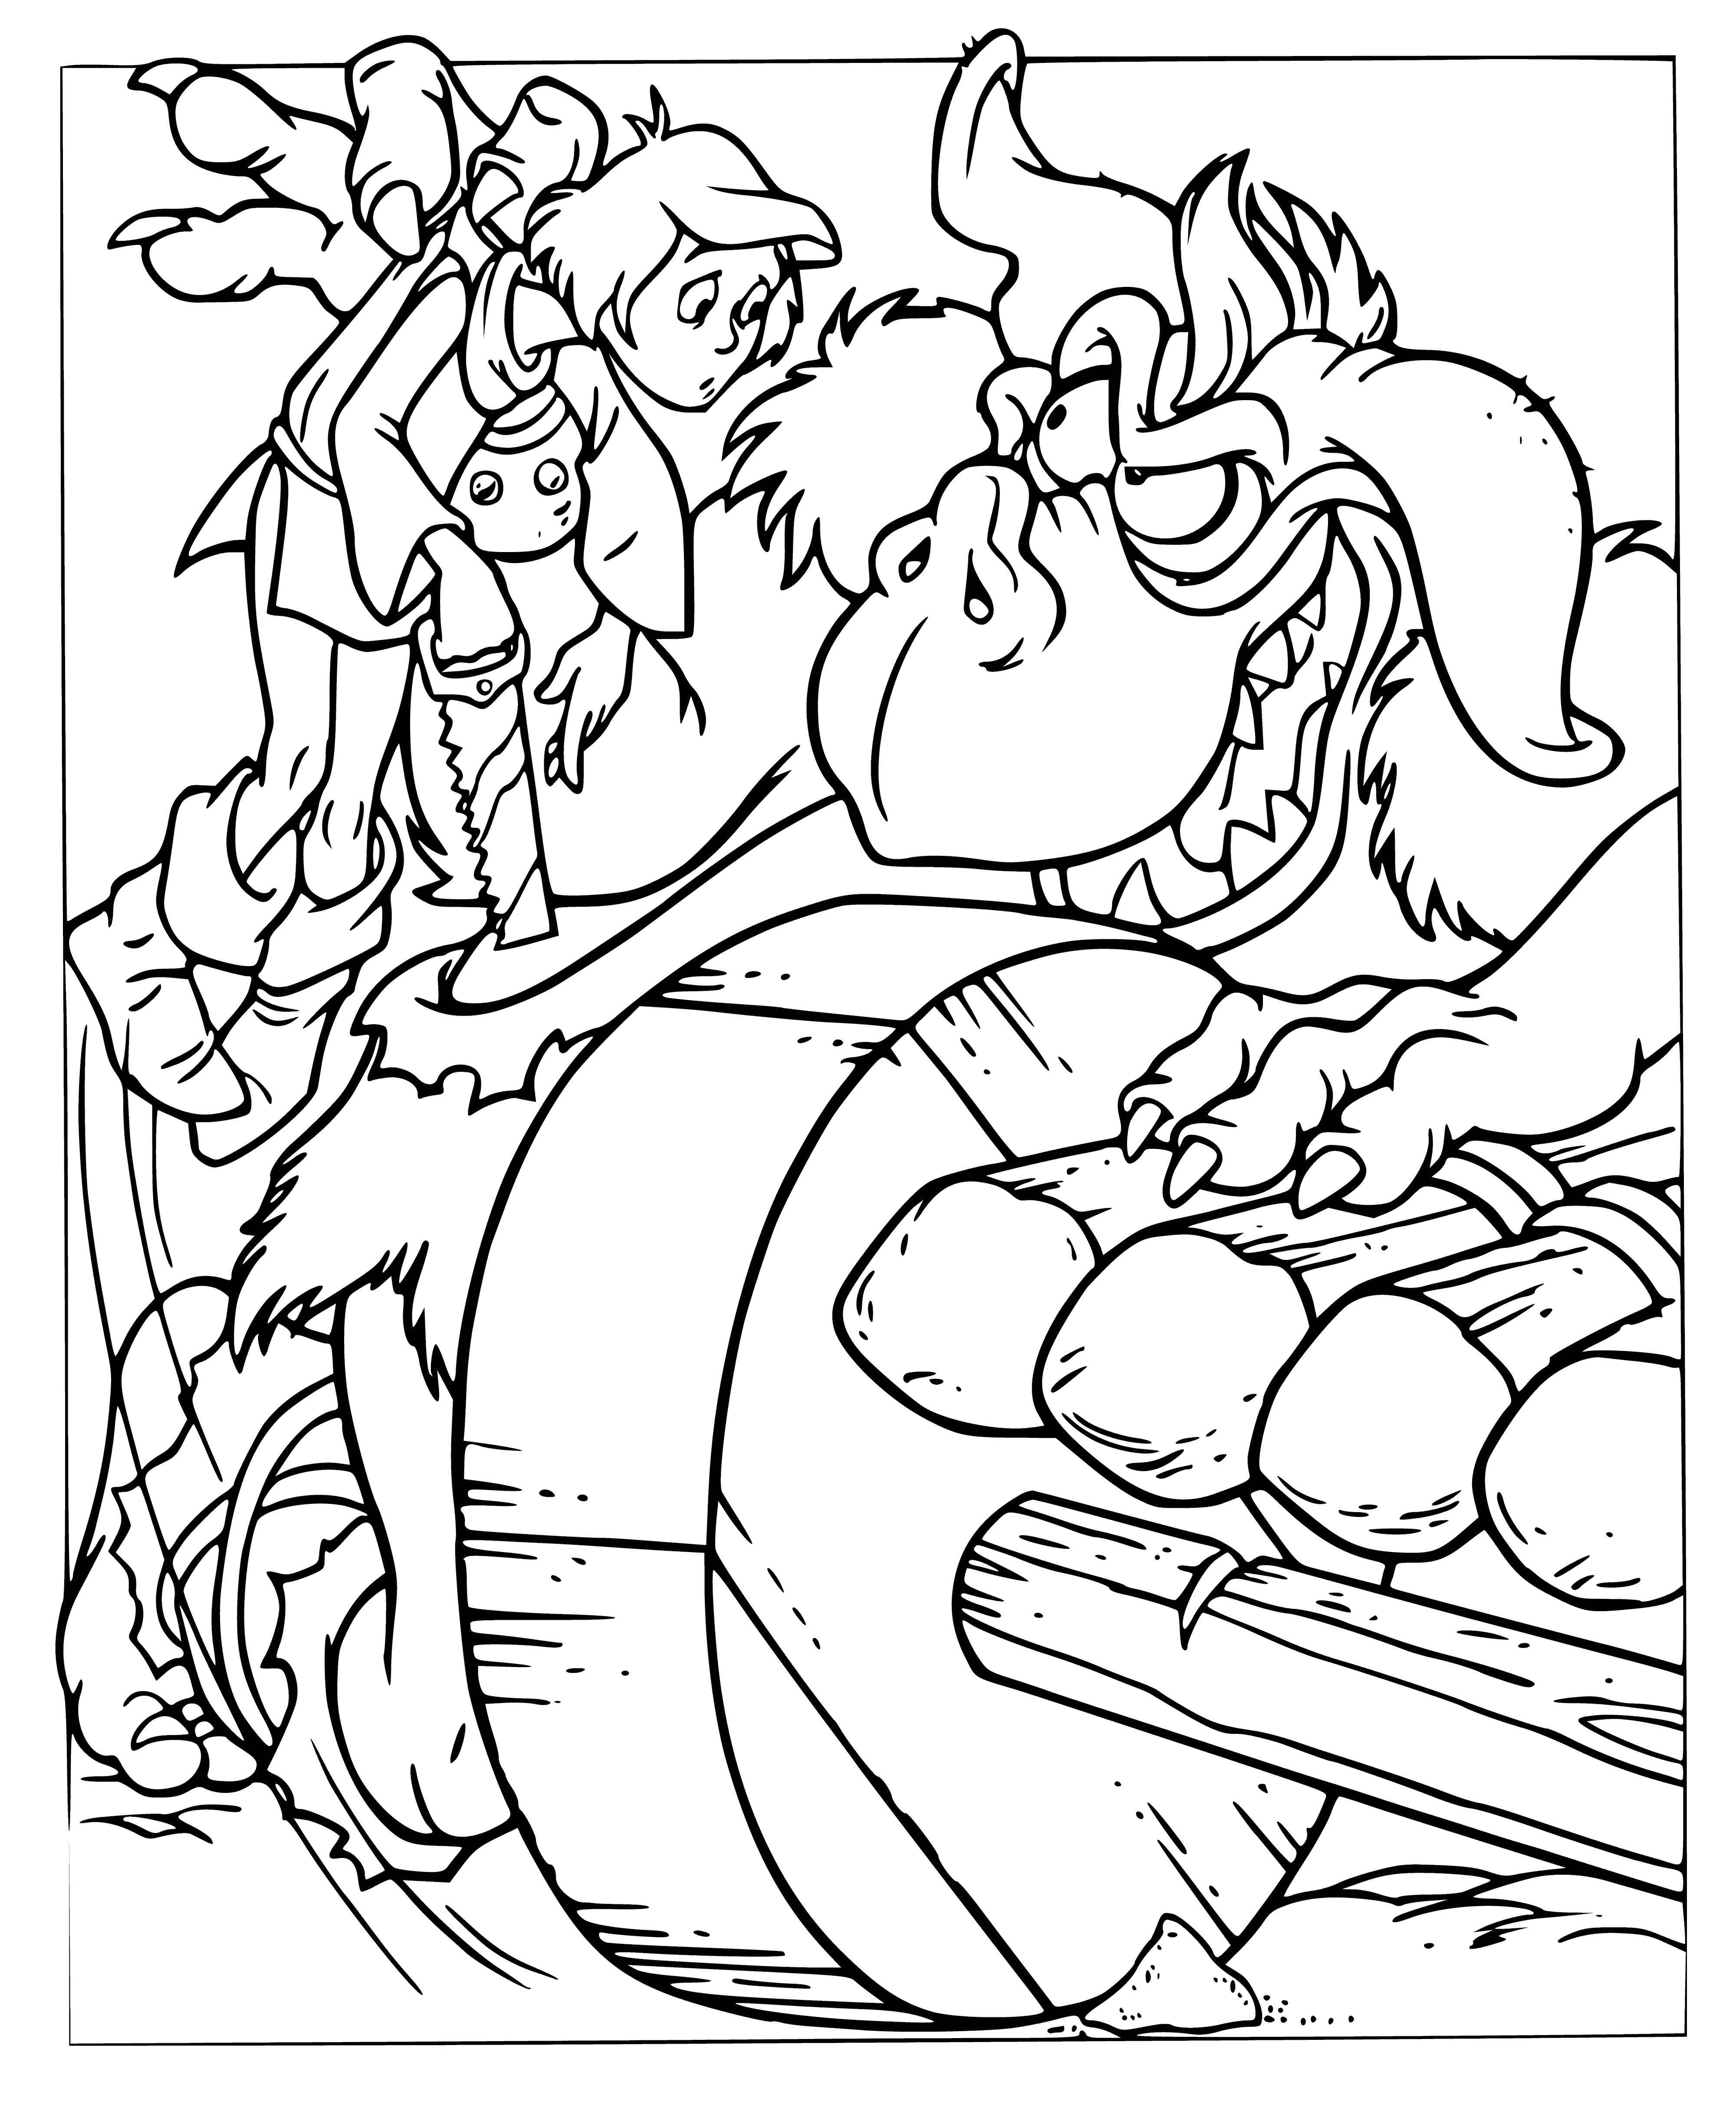 Goblin coloring page